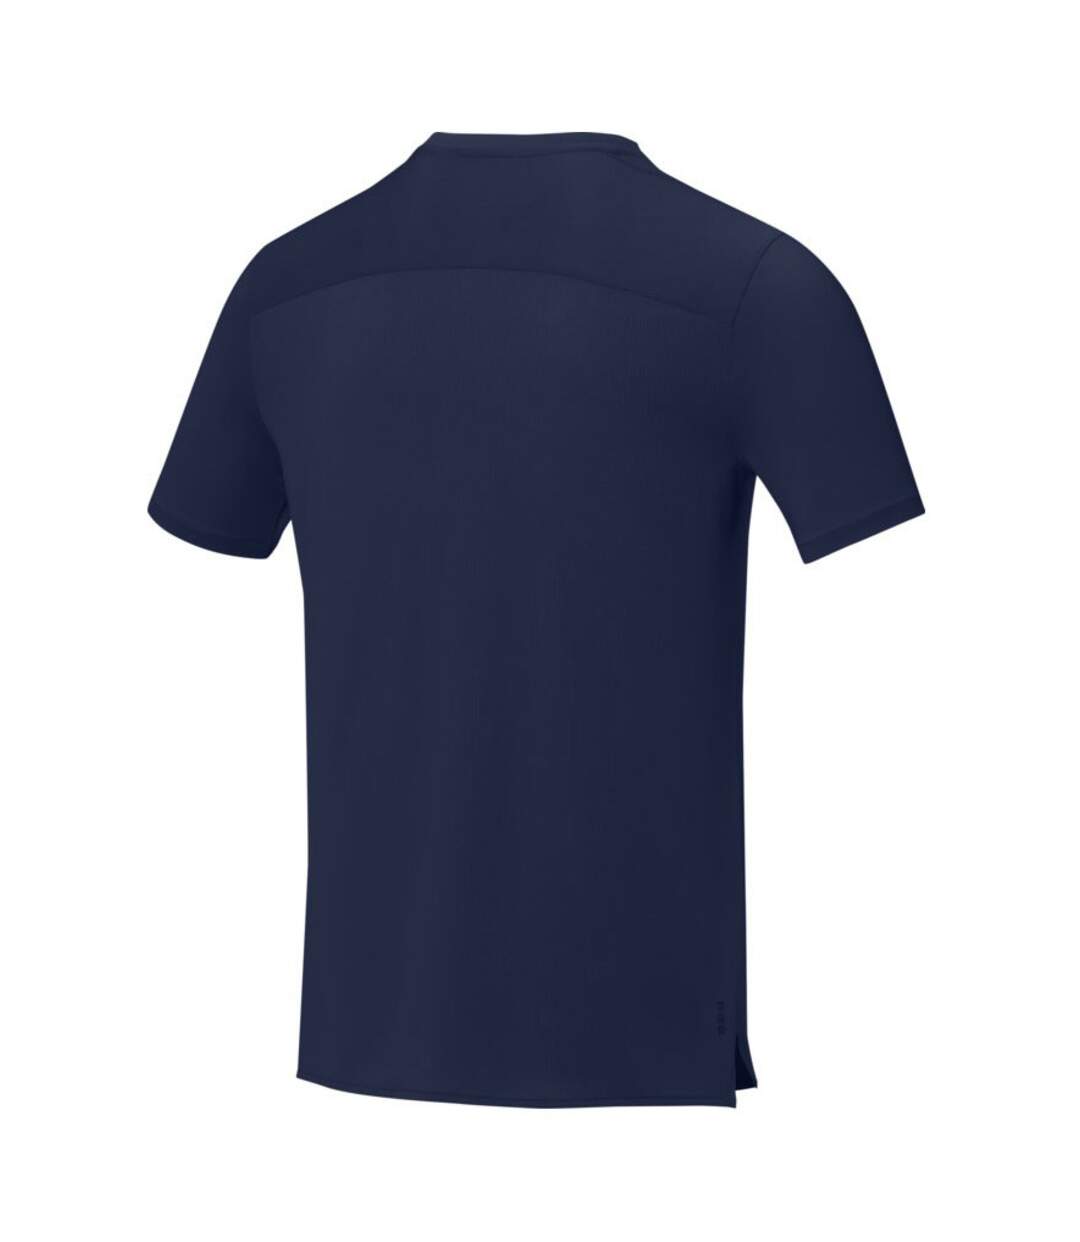 Elevate NXT - T-shirt BORAX - Homme (Bleu marine) - UTPF3955